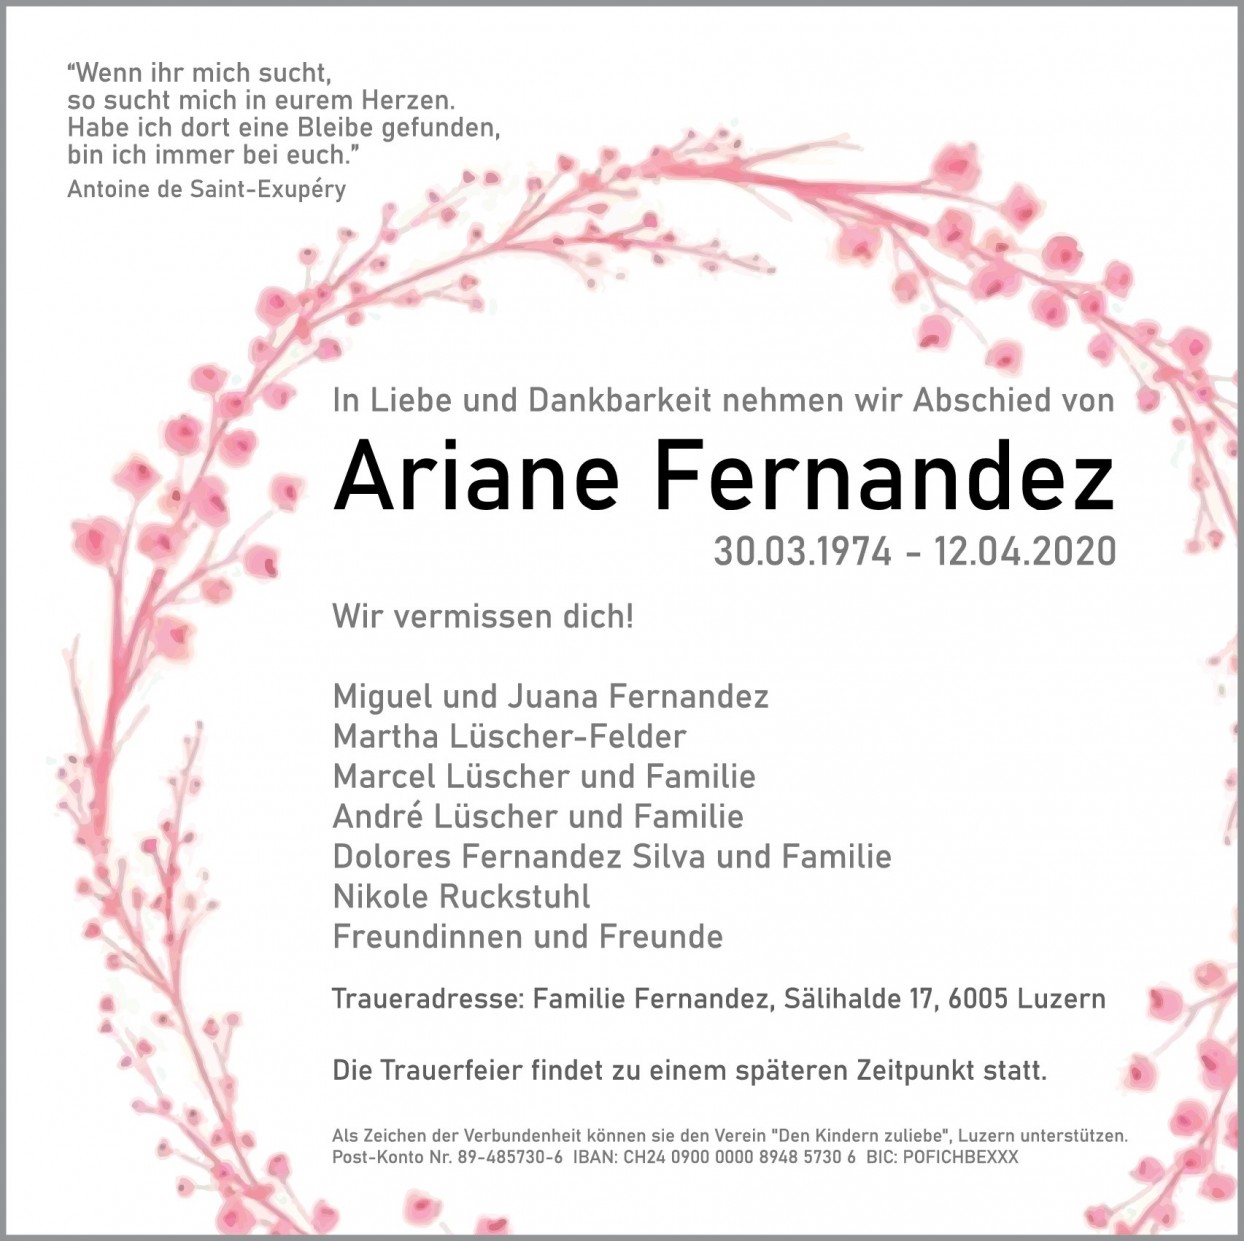 Ariane Fernandez